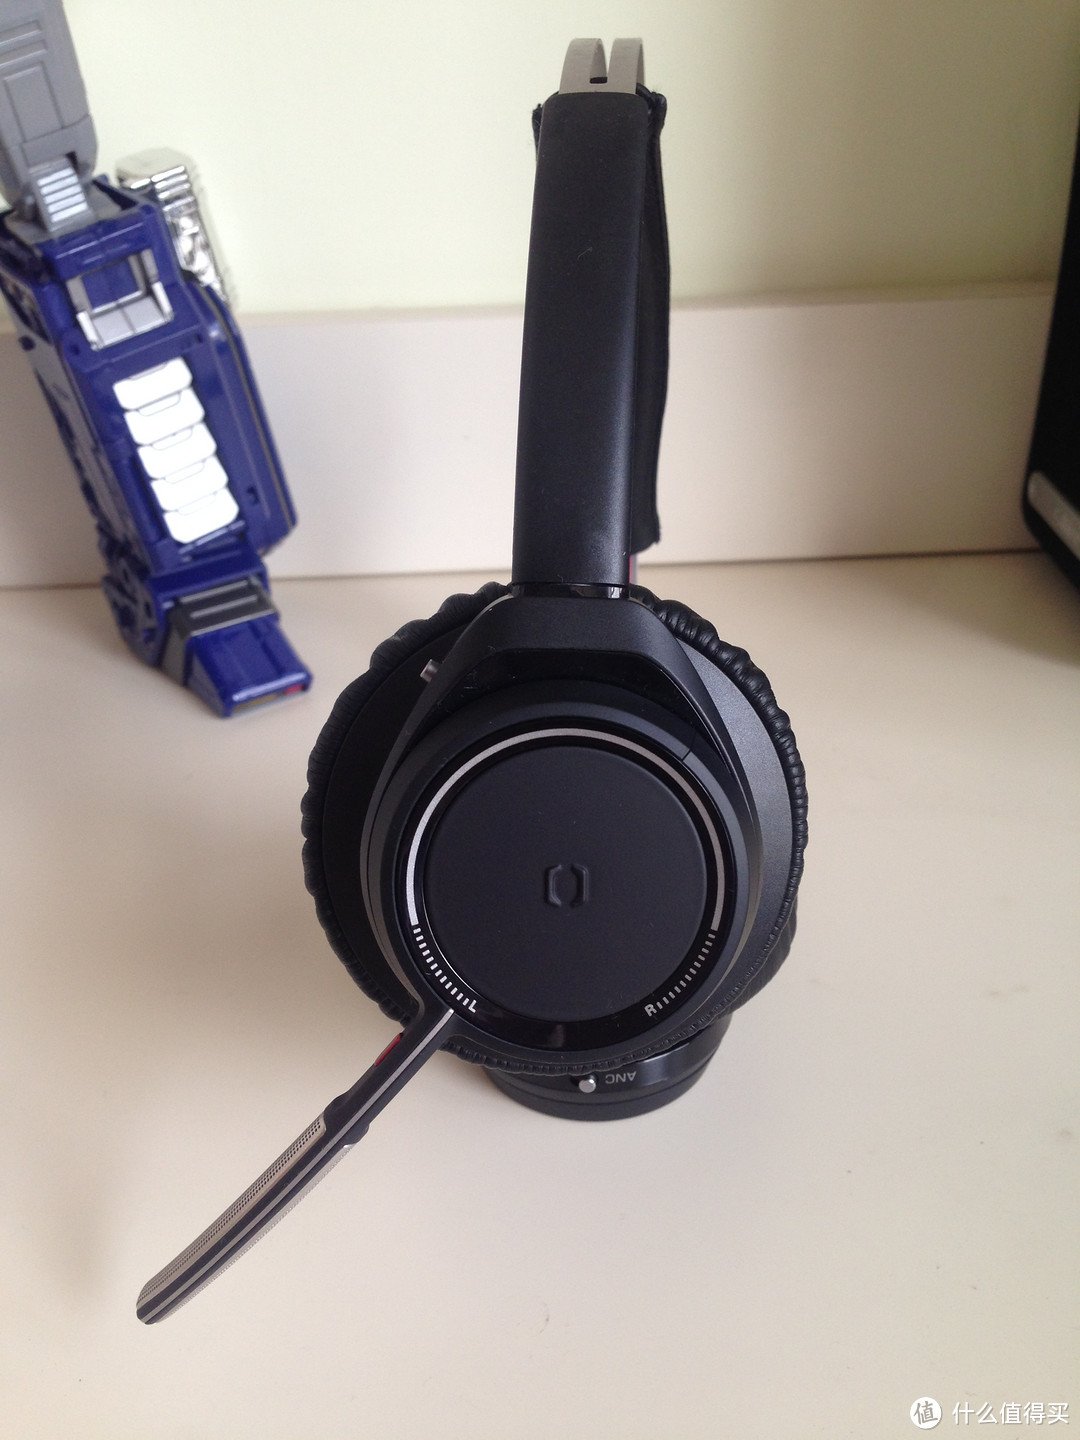 #本站首晒# Plantronics 缤特力 Voyager Focus UC B825 头戴式蓝牙耳机 评测